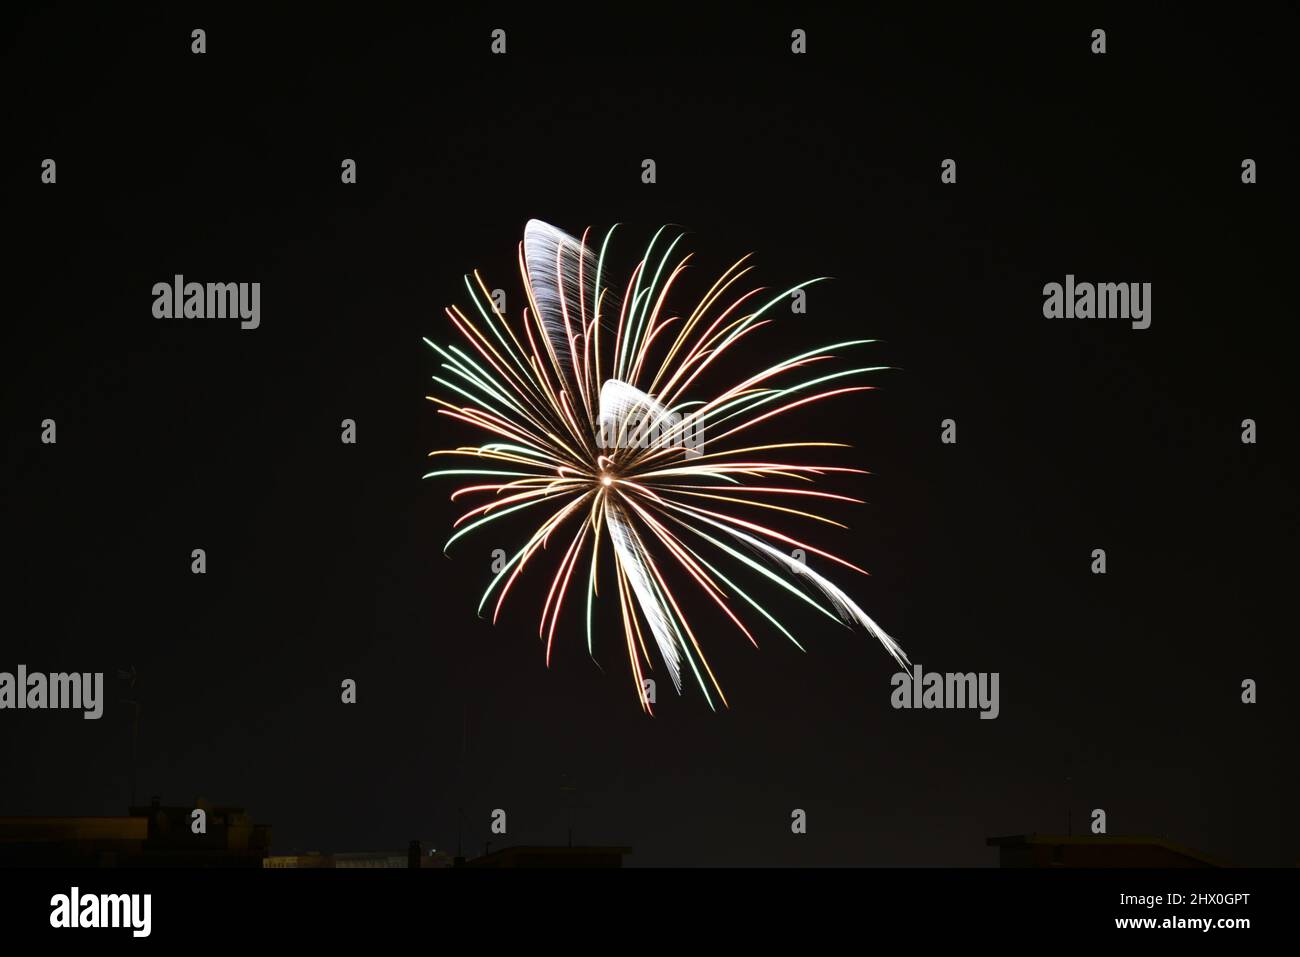 Fireworks by Night on a Black Sky Background Stock Photo